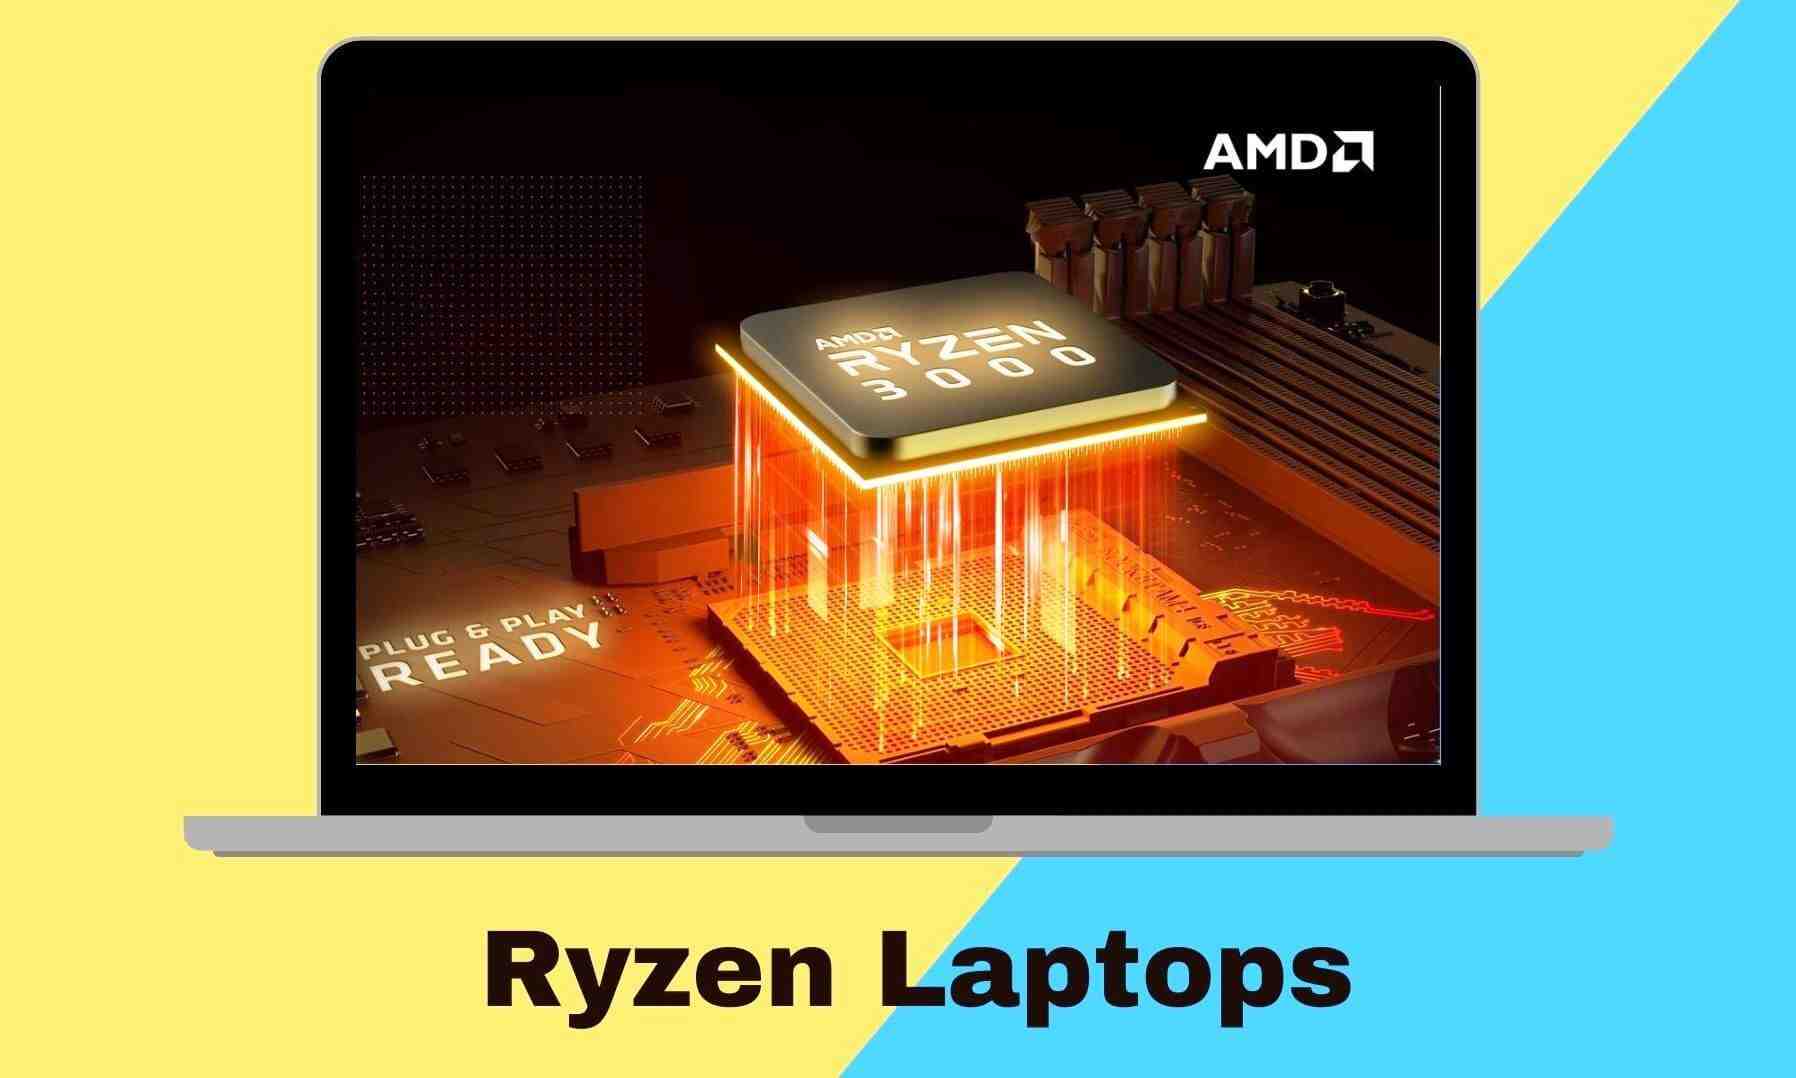 Are Ryzen Laptops Good